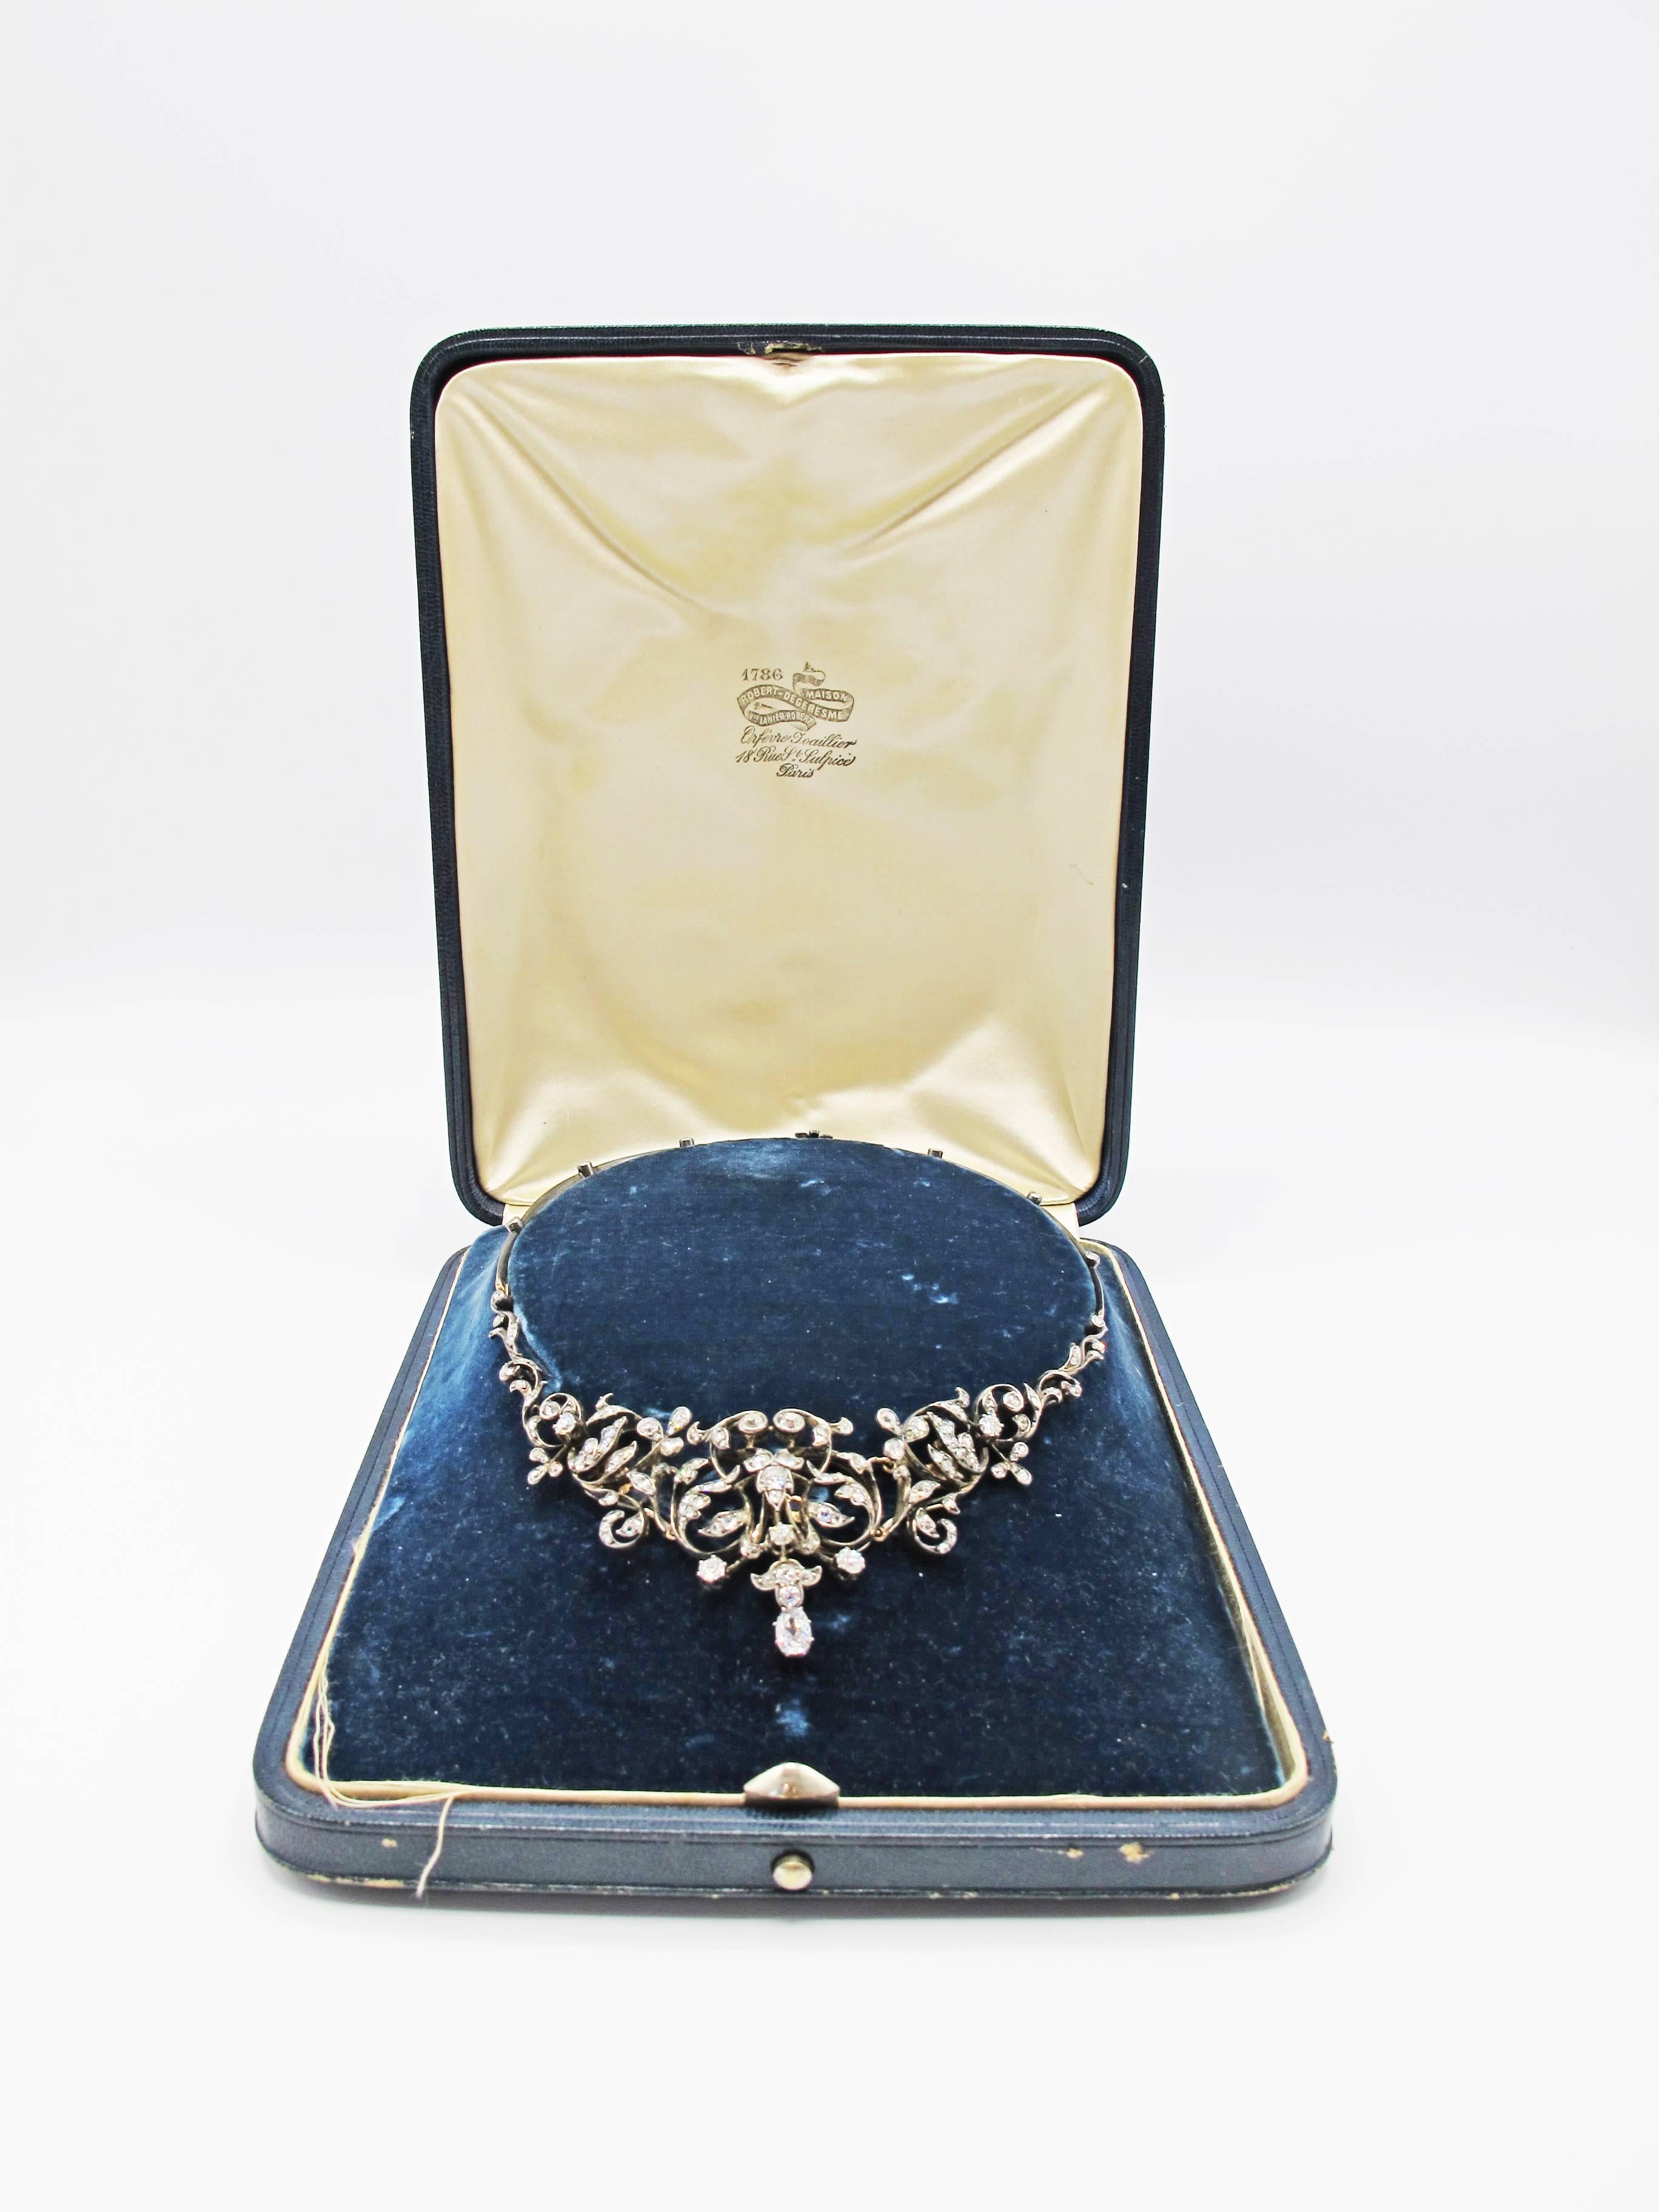 French Princely Family Collection Antique Diamond Tiara Convert ...